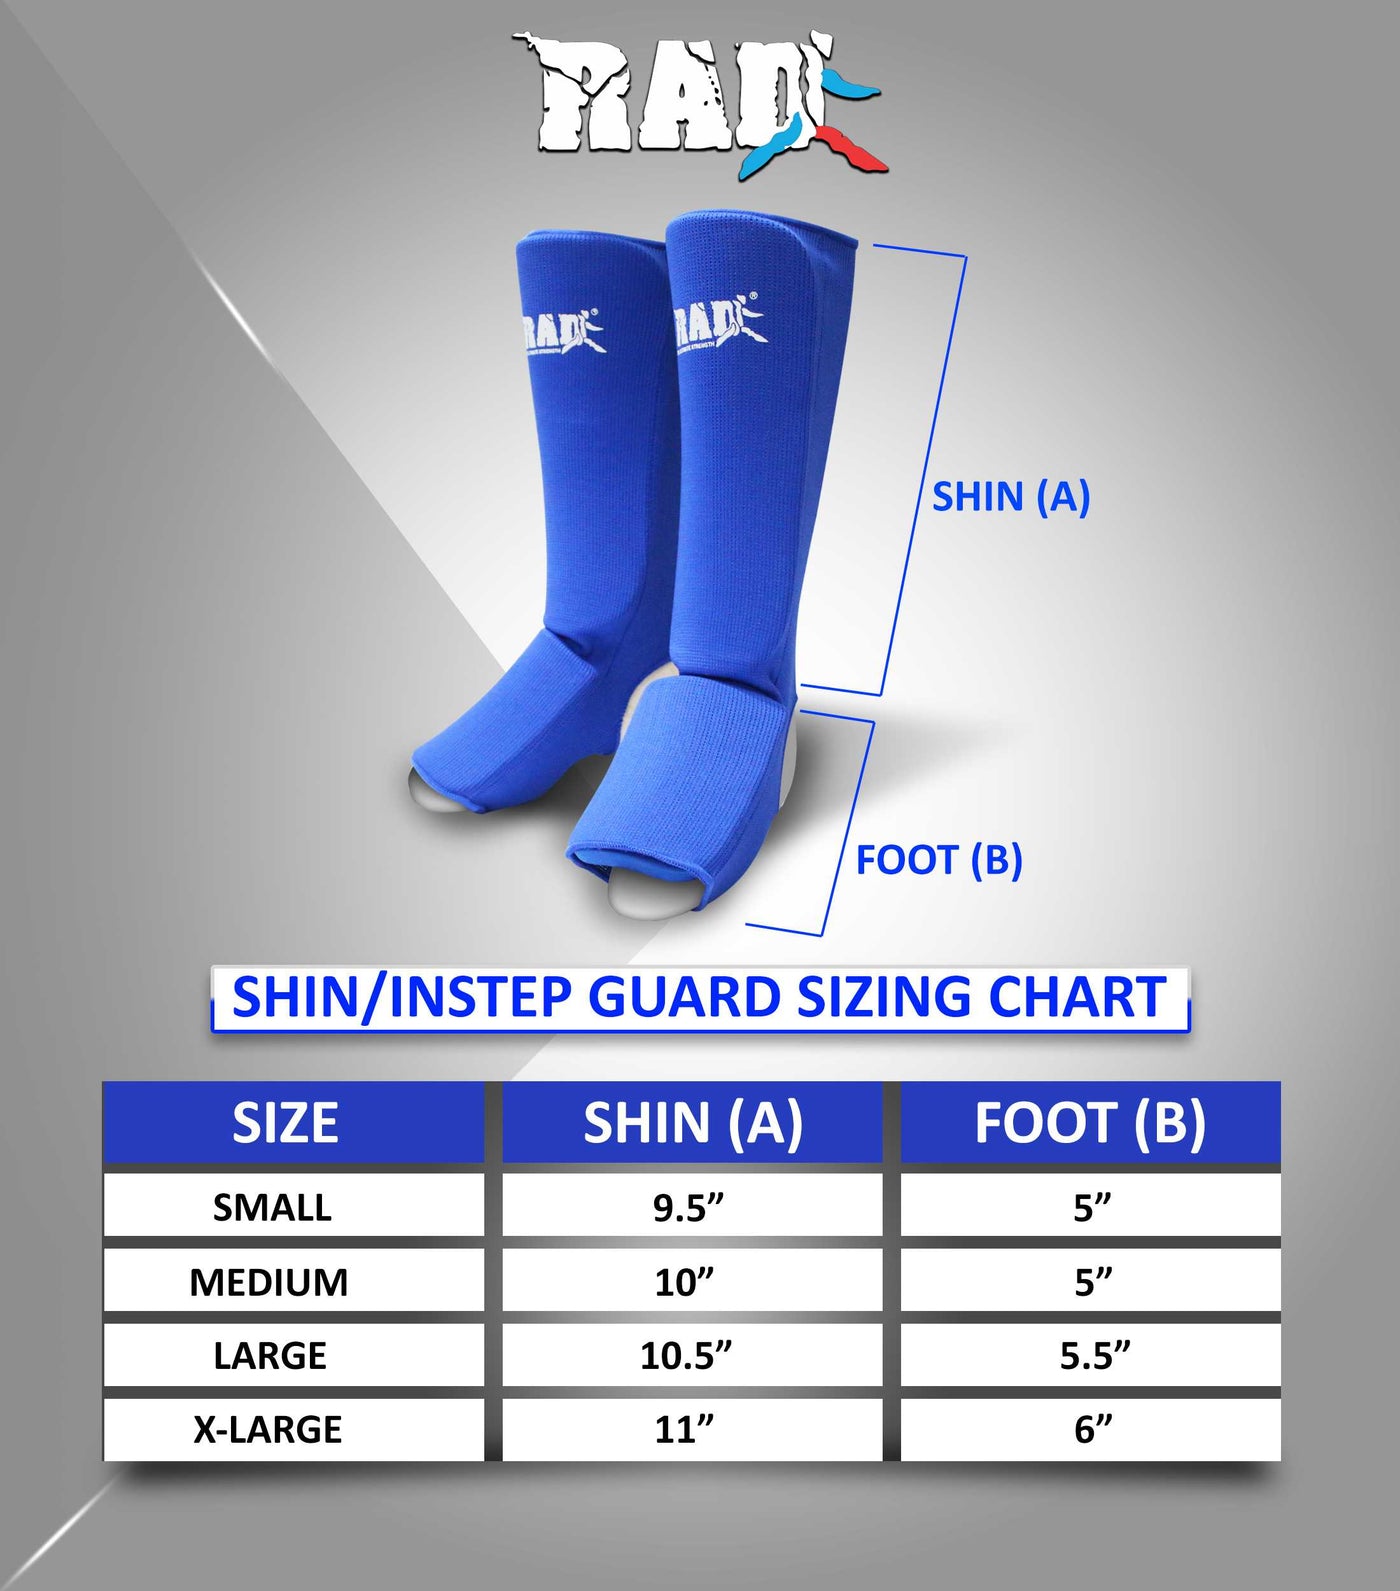 RAD MMA Shin Instep Foam Pad, Elastic clot, Support Boxing Leg Guards Foot Protective Gear Kickboxing